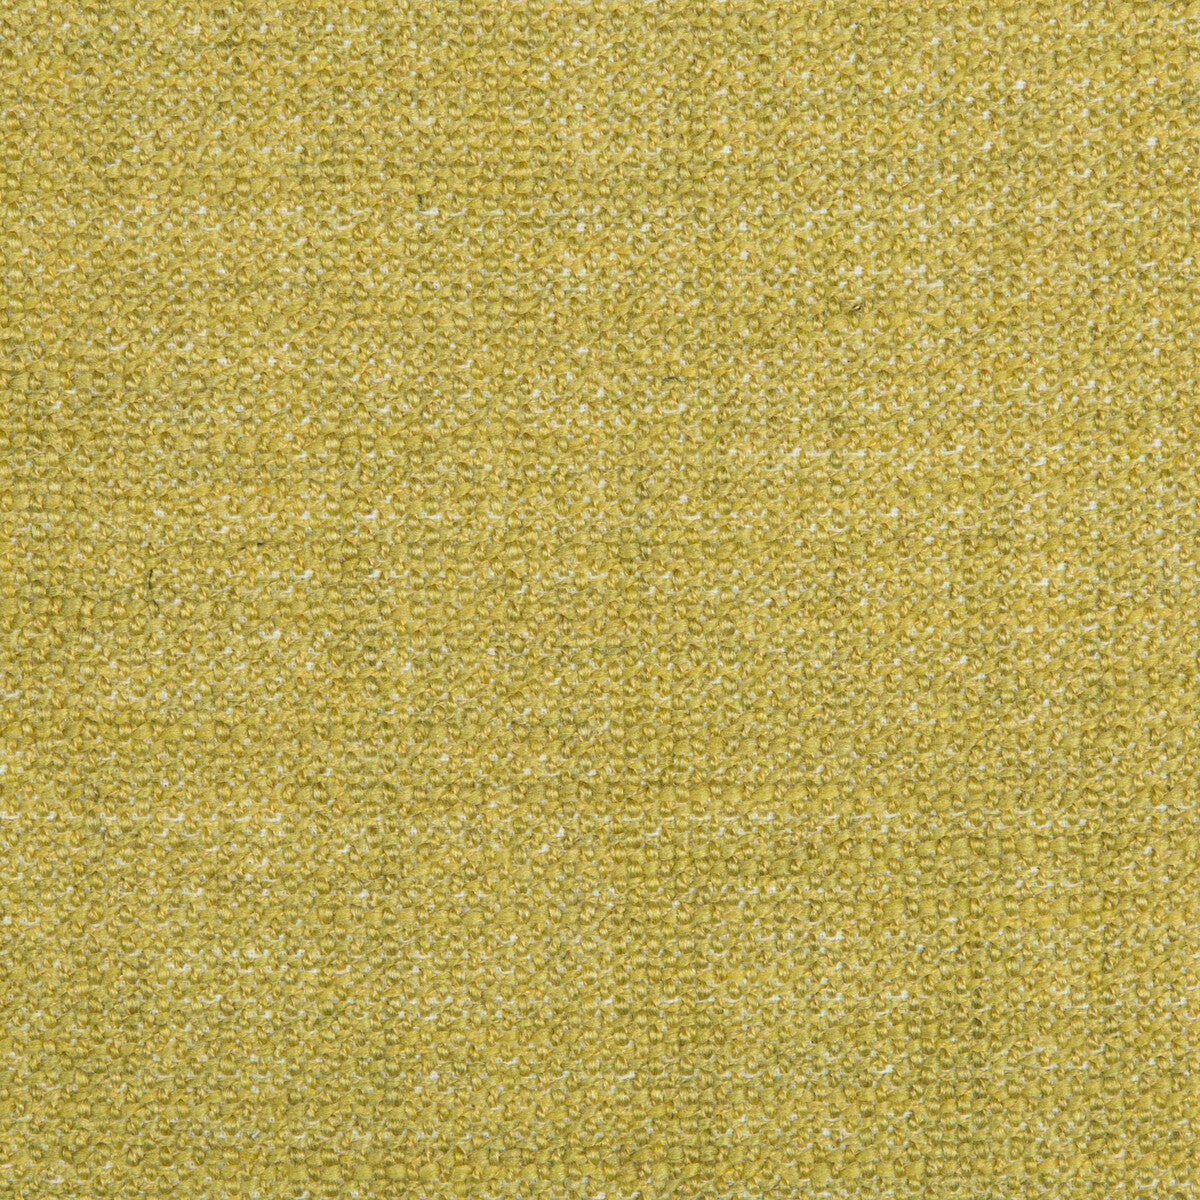 Kravet Smart fabric in 35379-23 color - pattern 35379.23.0 - by Kravet Smart in the Performance Kravetarmor collection